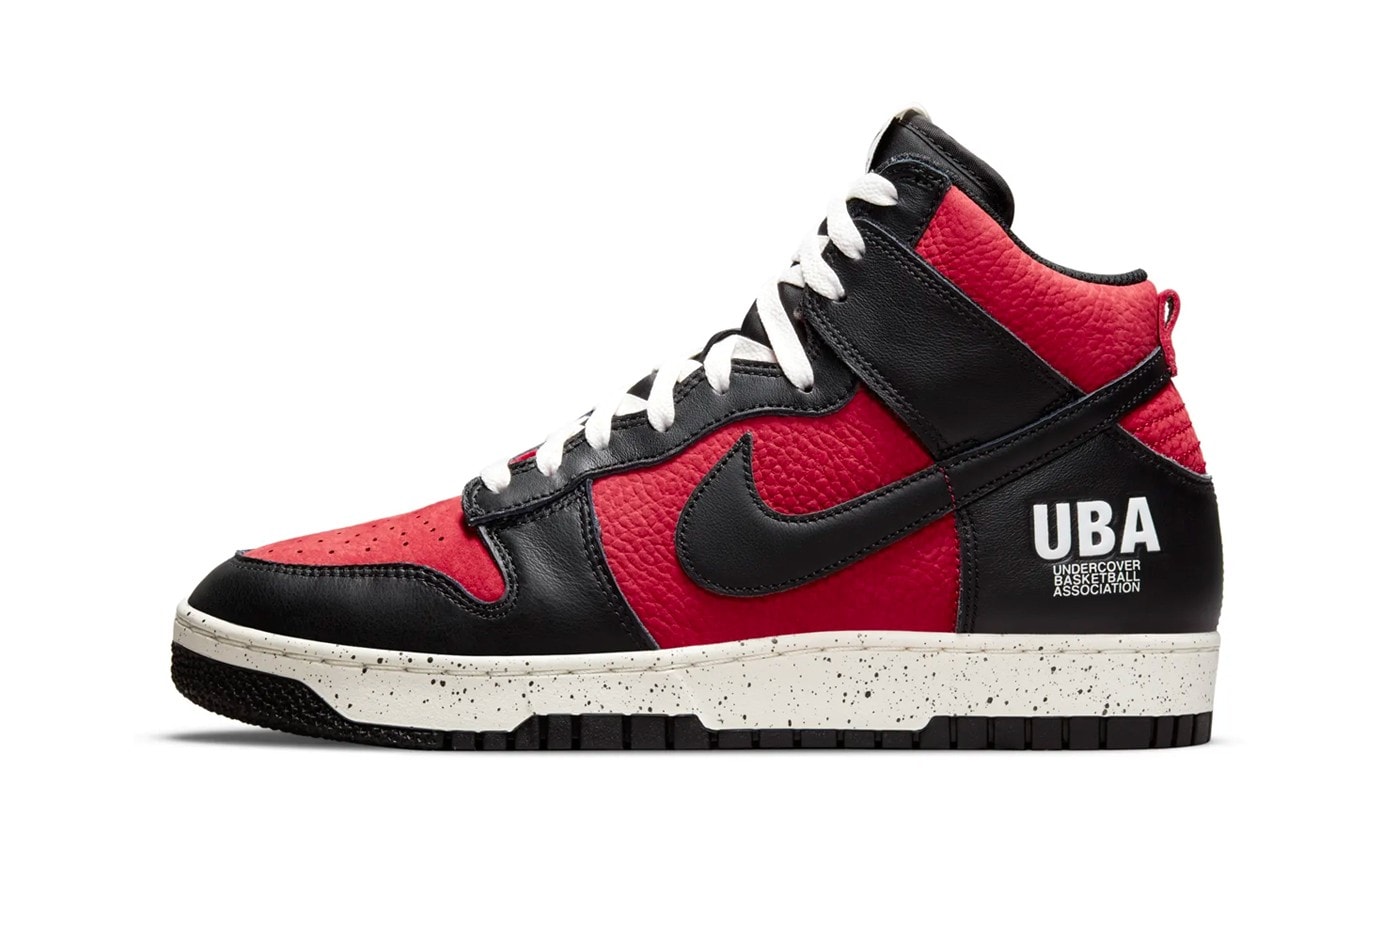 UNDERCOVER x Nike Dunk High 最新聯名鞋款「UBA」正式登場